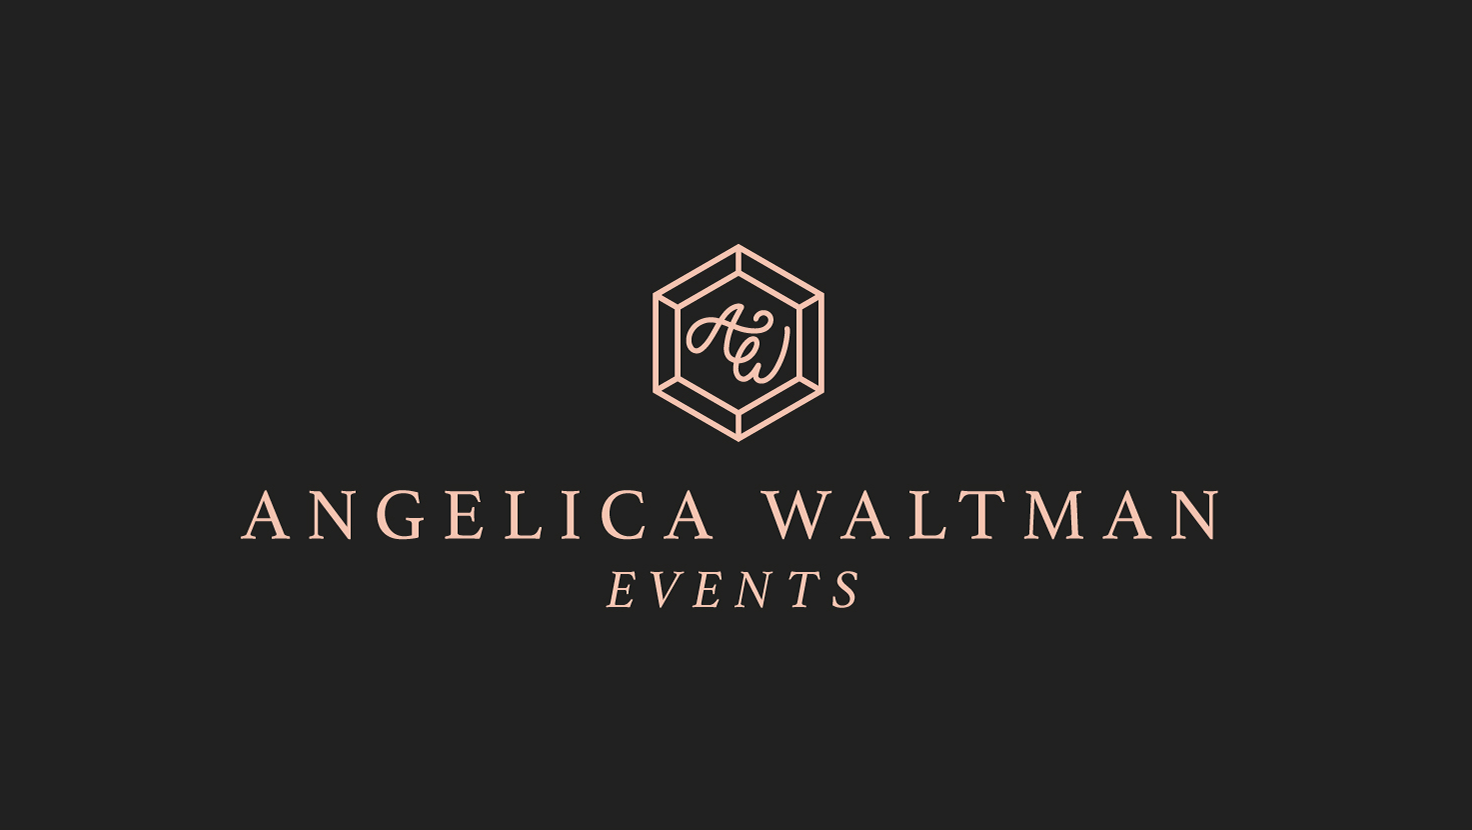 Water and Sky - Angelica Waltman Events